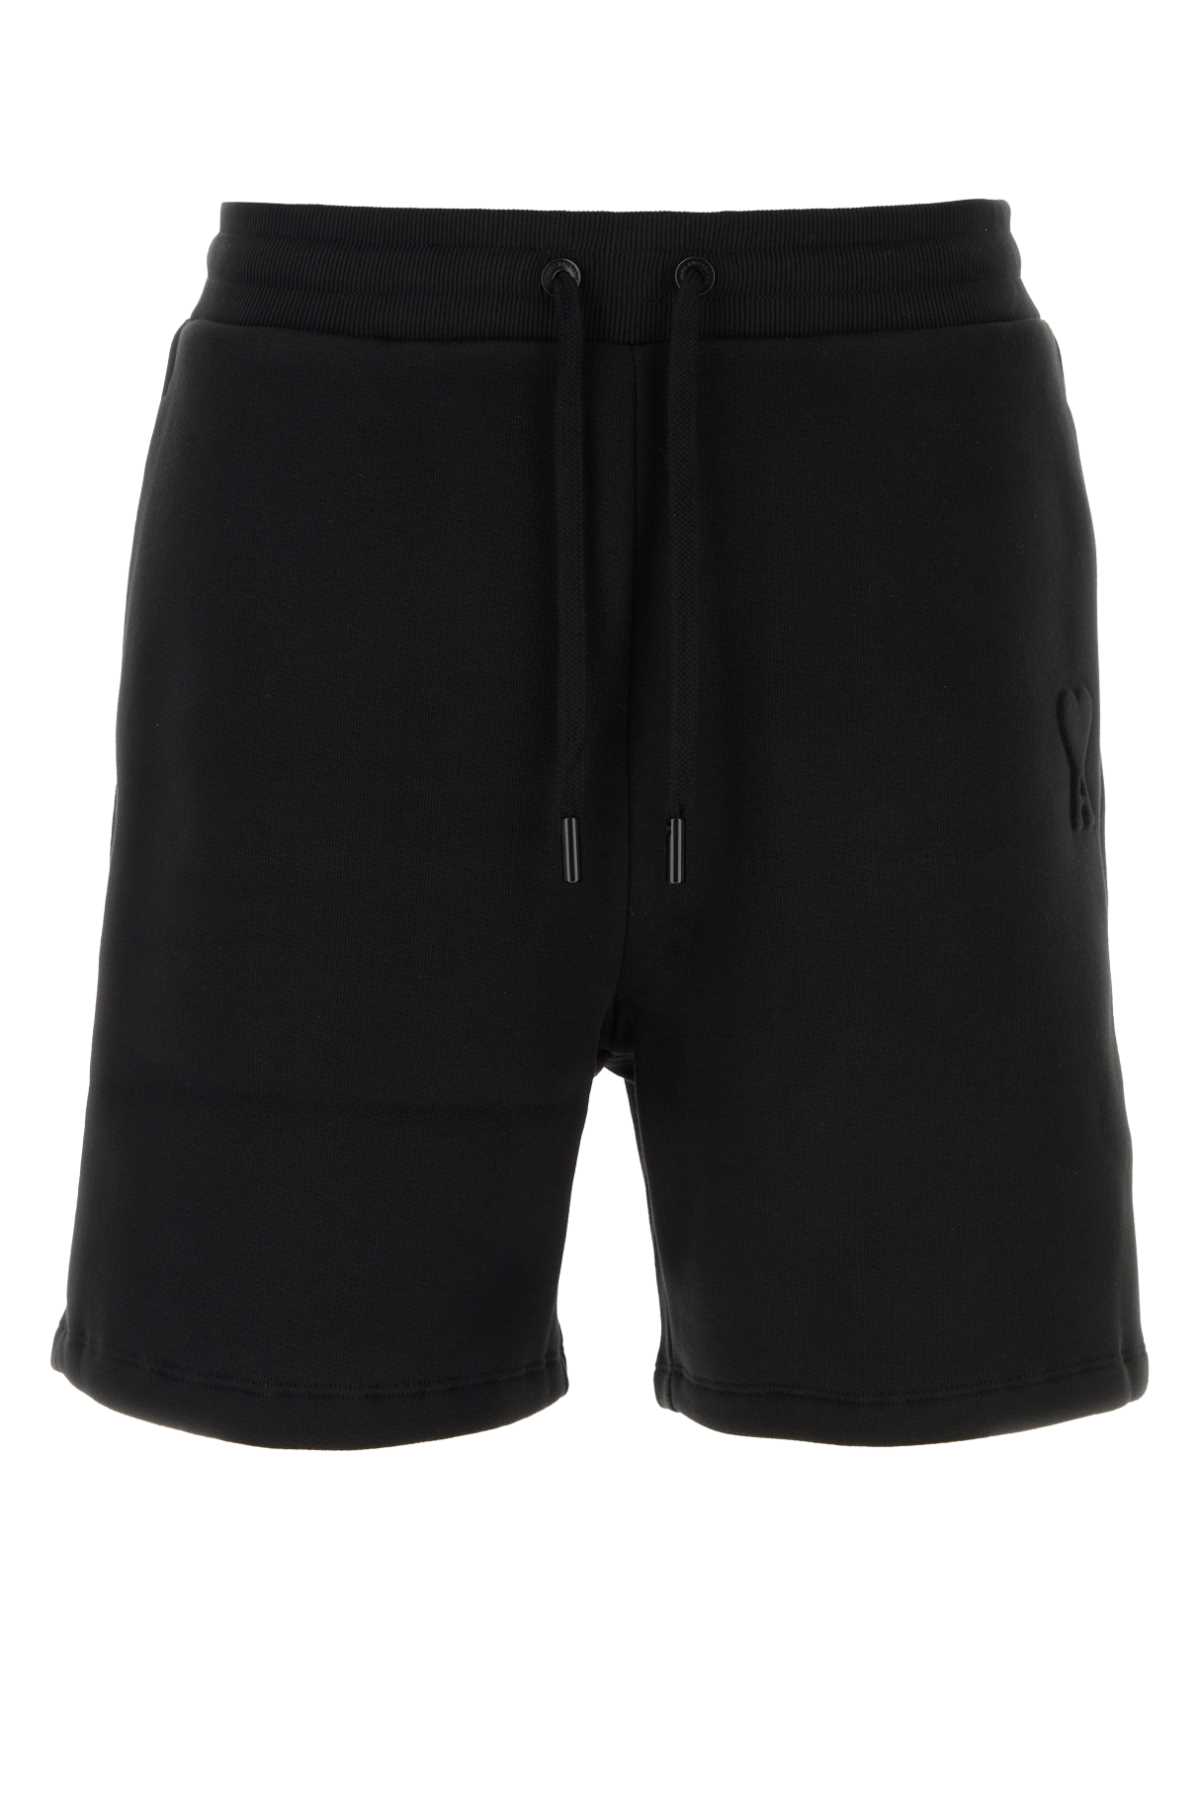 Shop Ami Alexandre Mattiussi Black Cotton Blend Bermuda Shorts